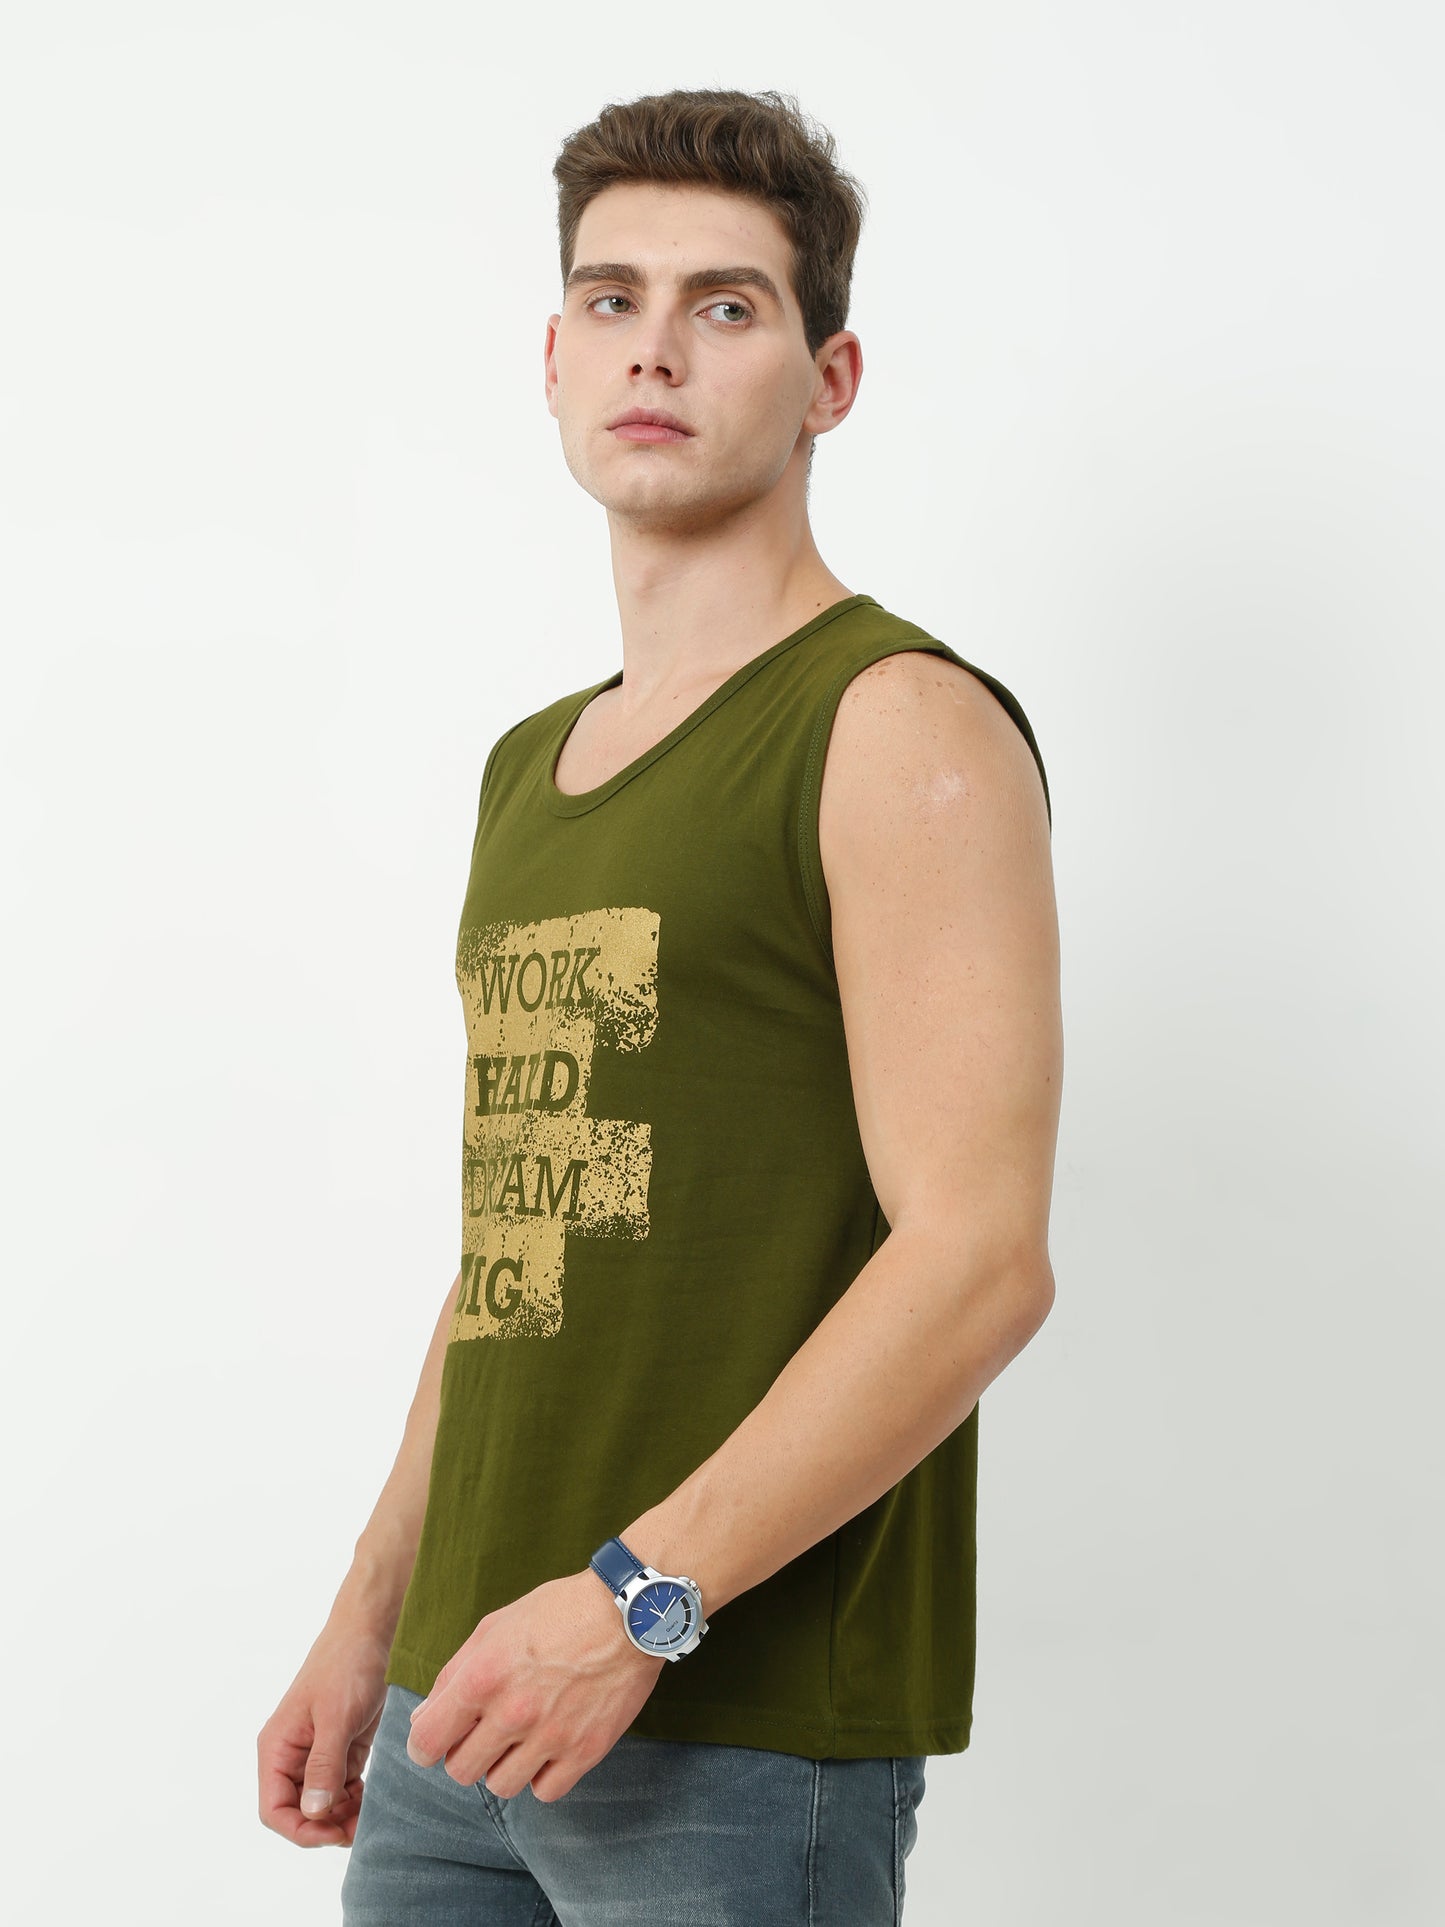 Men's Cotton Printed Sleeveless T-Shirt